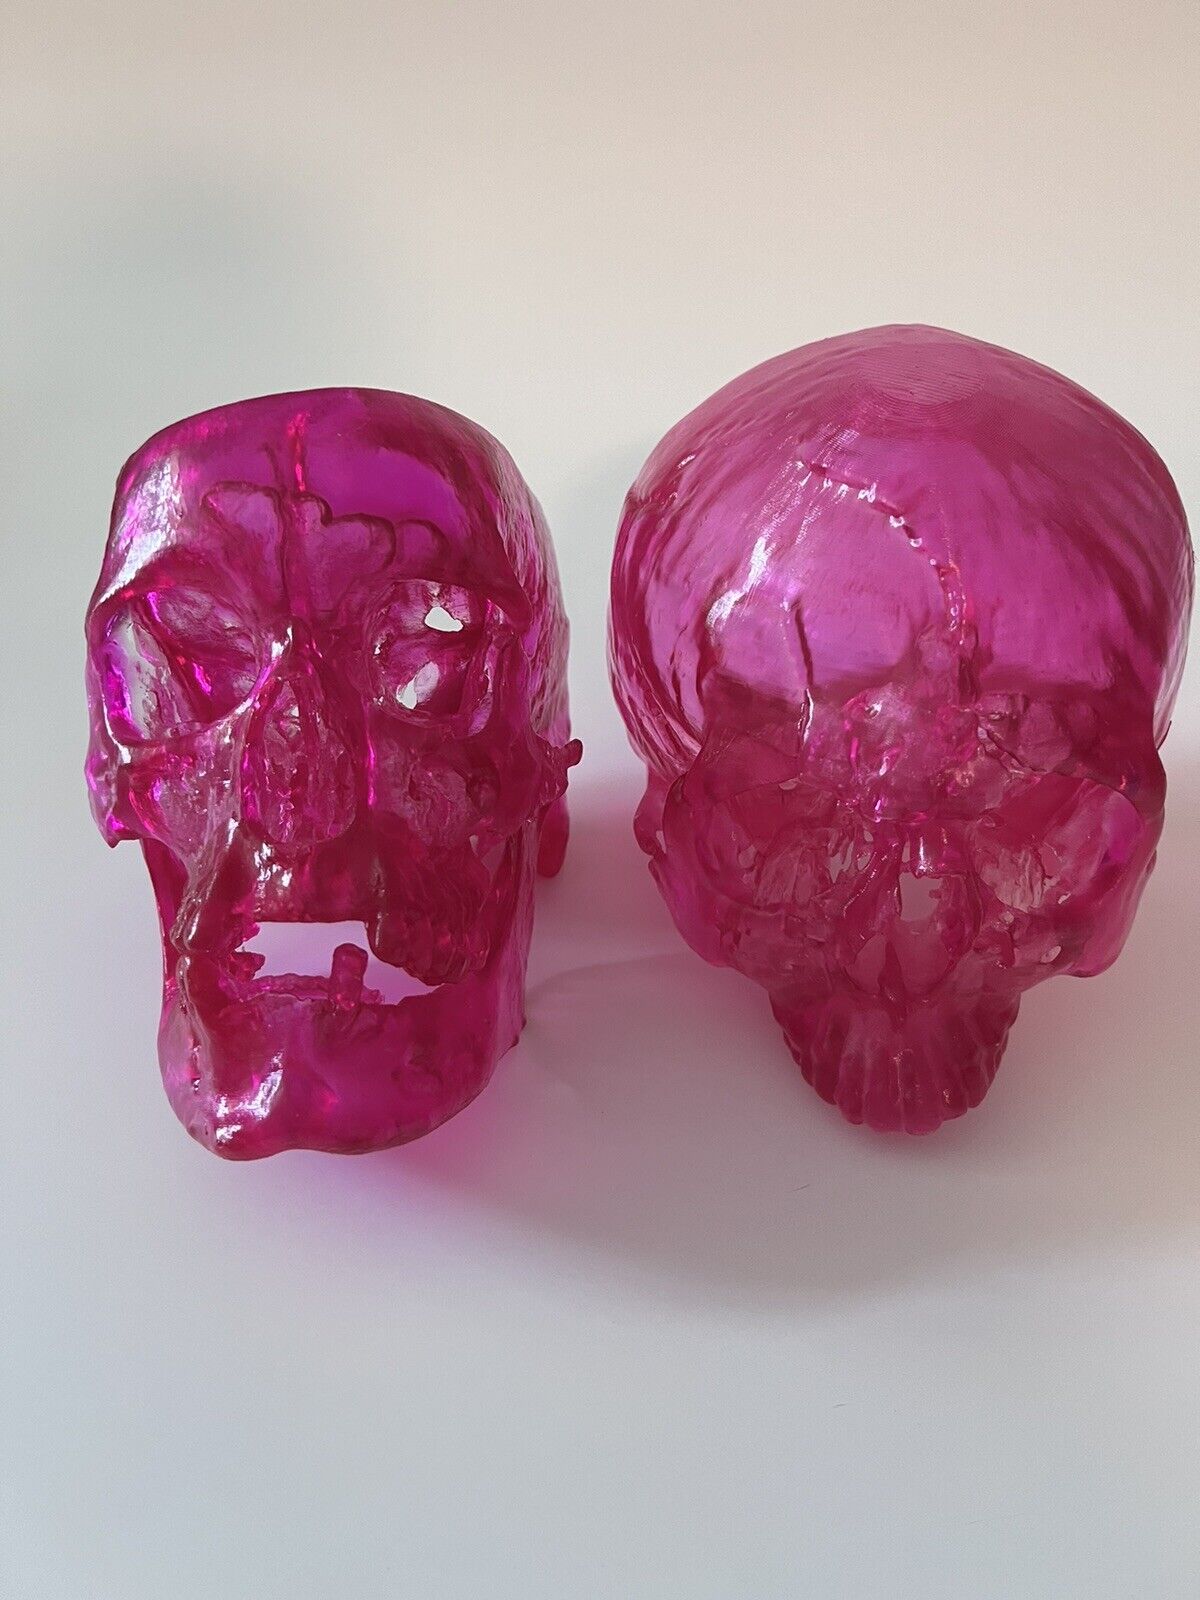 Pink Resin Skull Models Of Real Human Heads Halloween